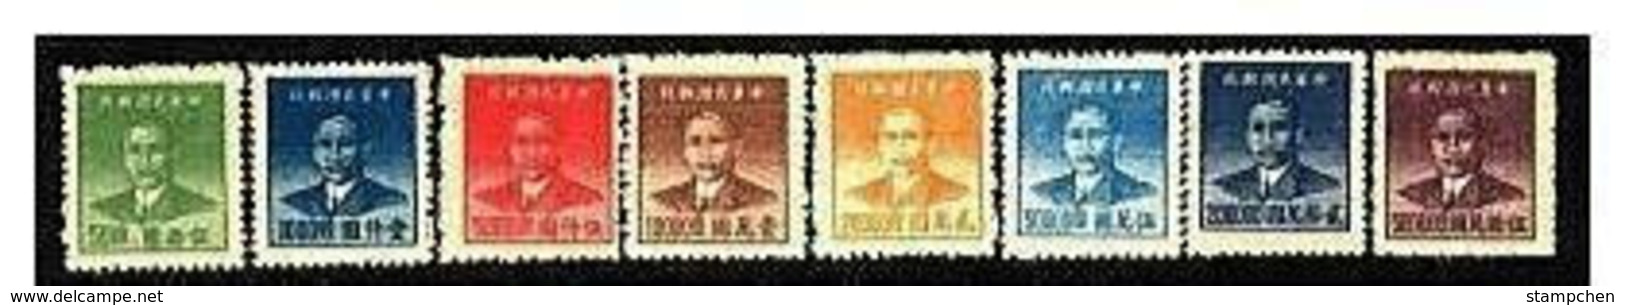 Rep China 1949 Sun Yat-sen Gold Yuan Hwa Nan Print Stamps D62 SYS - Nuovi